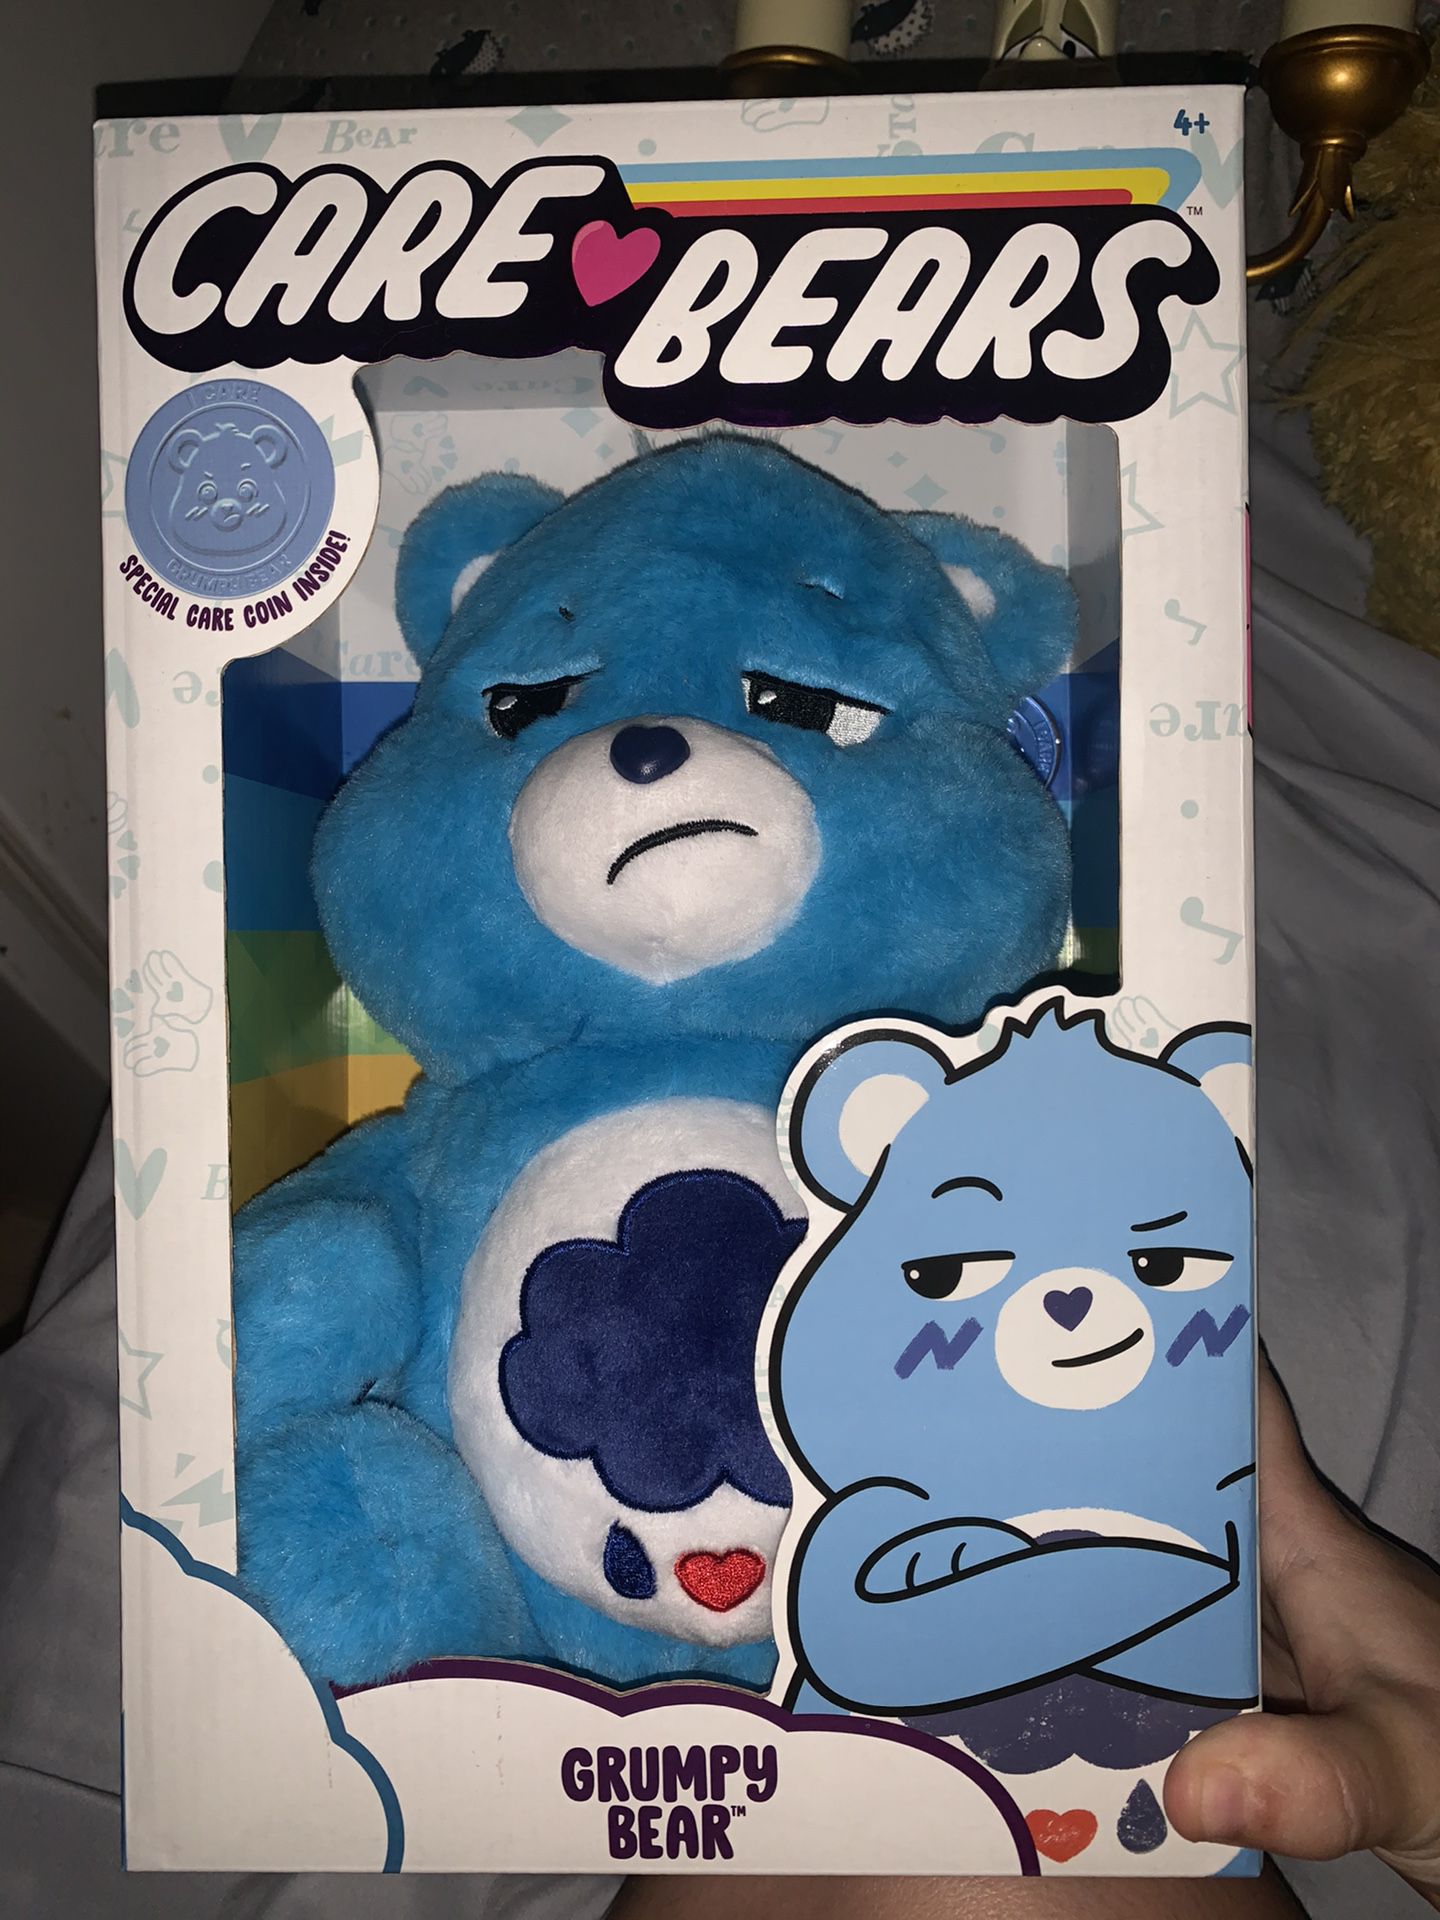 Grumpy Bear Care bear, MINT condition